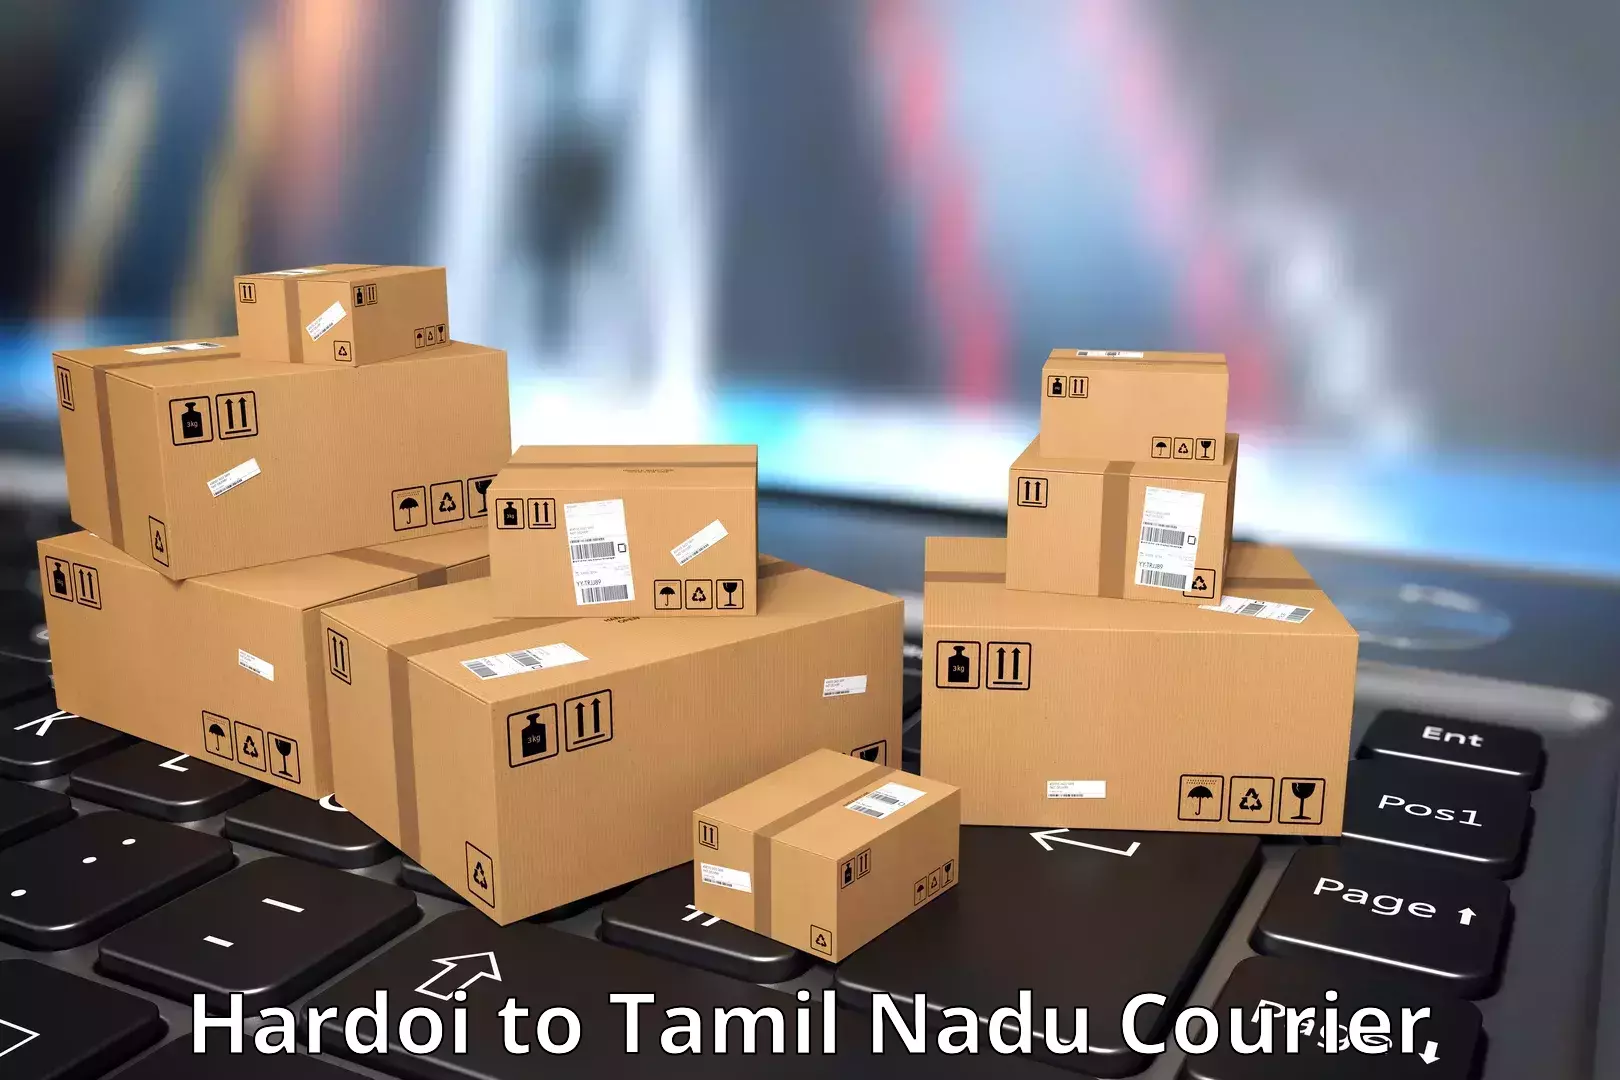 Courier service comparison Hardoi to Ambattur